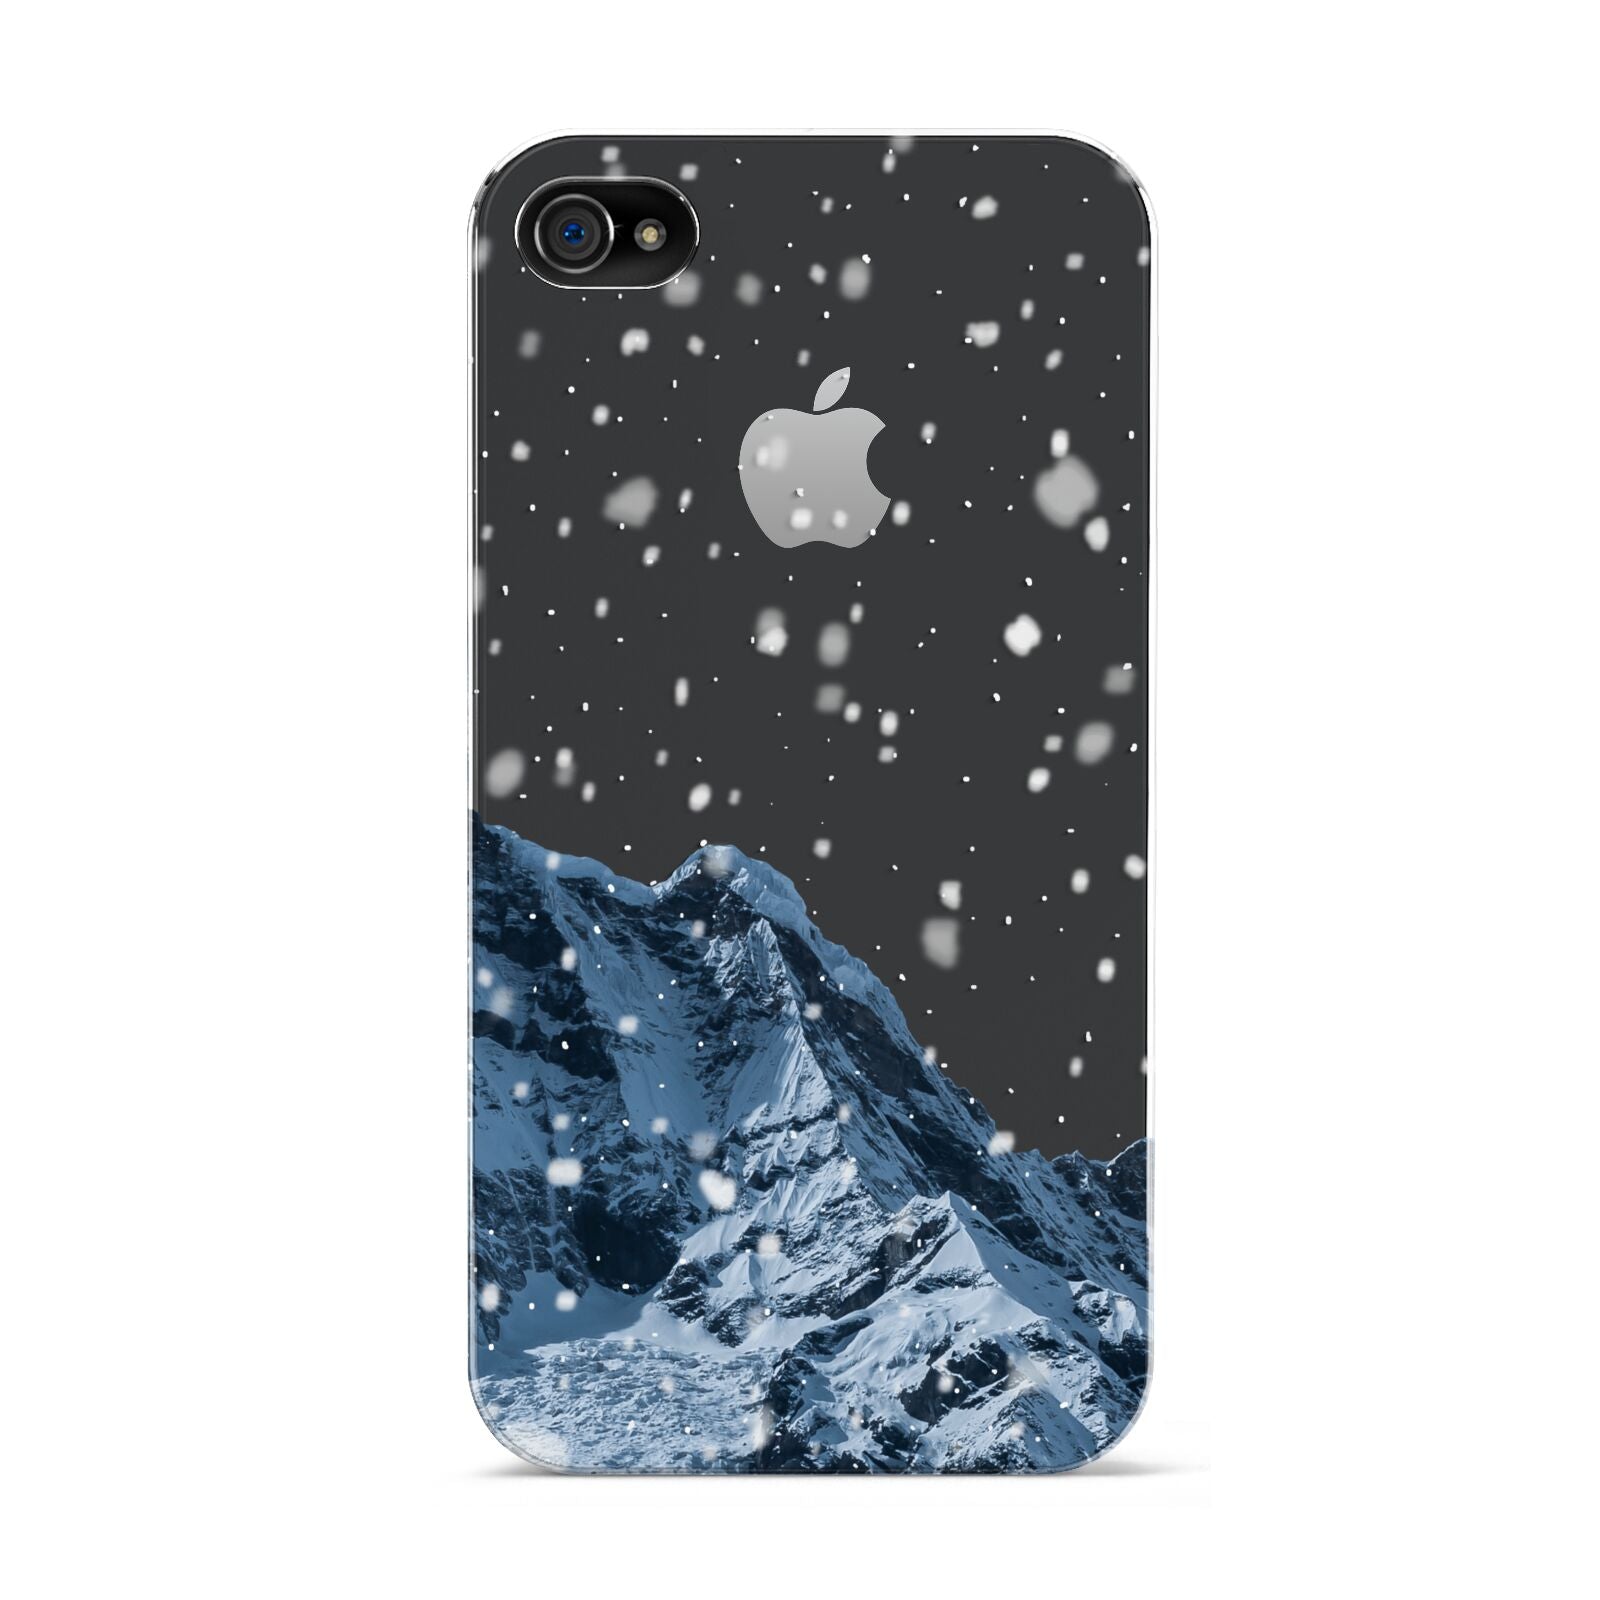 Mountain Snow Scene Apple iPhone 4s Case